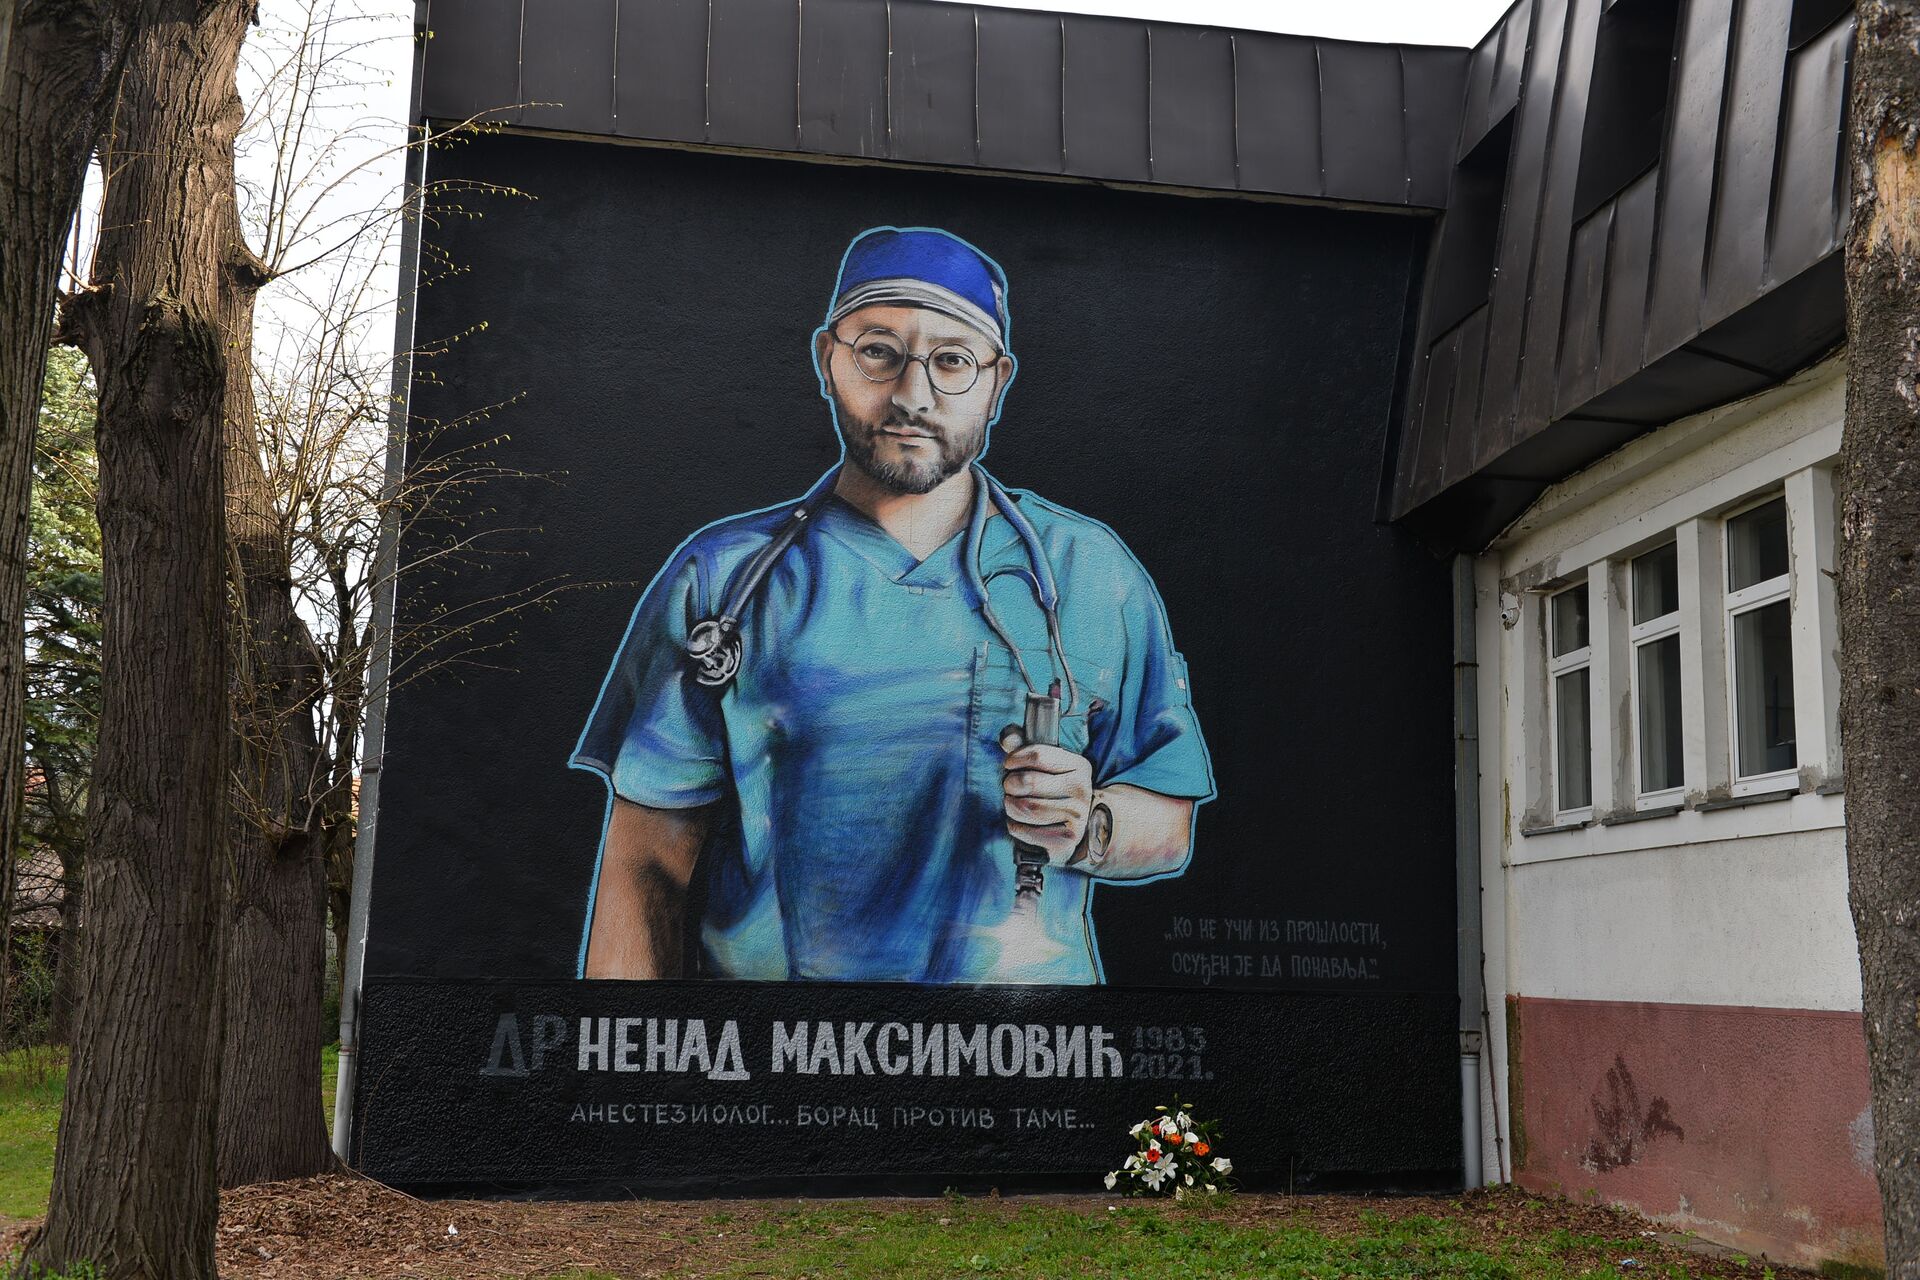 Мурал посвећен младом анастезиологу освануо на зиду његове бивше школе /фото/ - Sputnik Србија, 1920, 02.04.2021